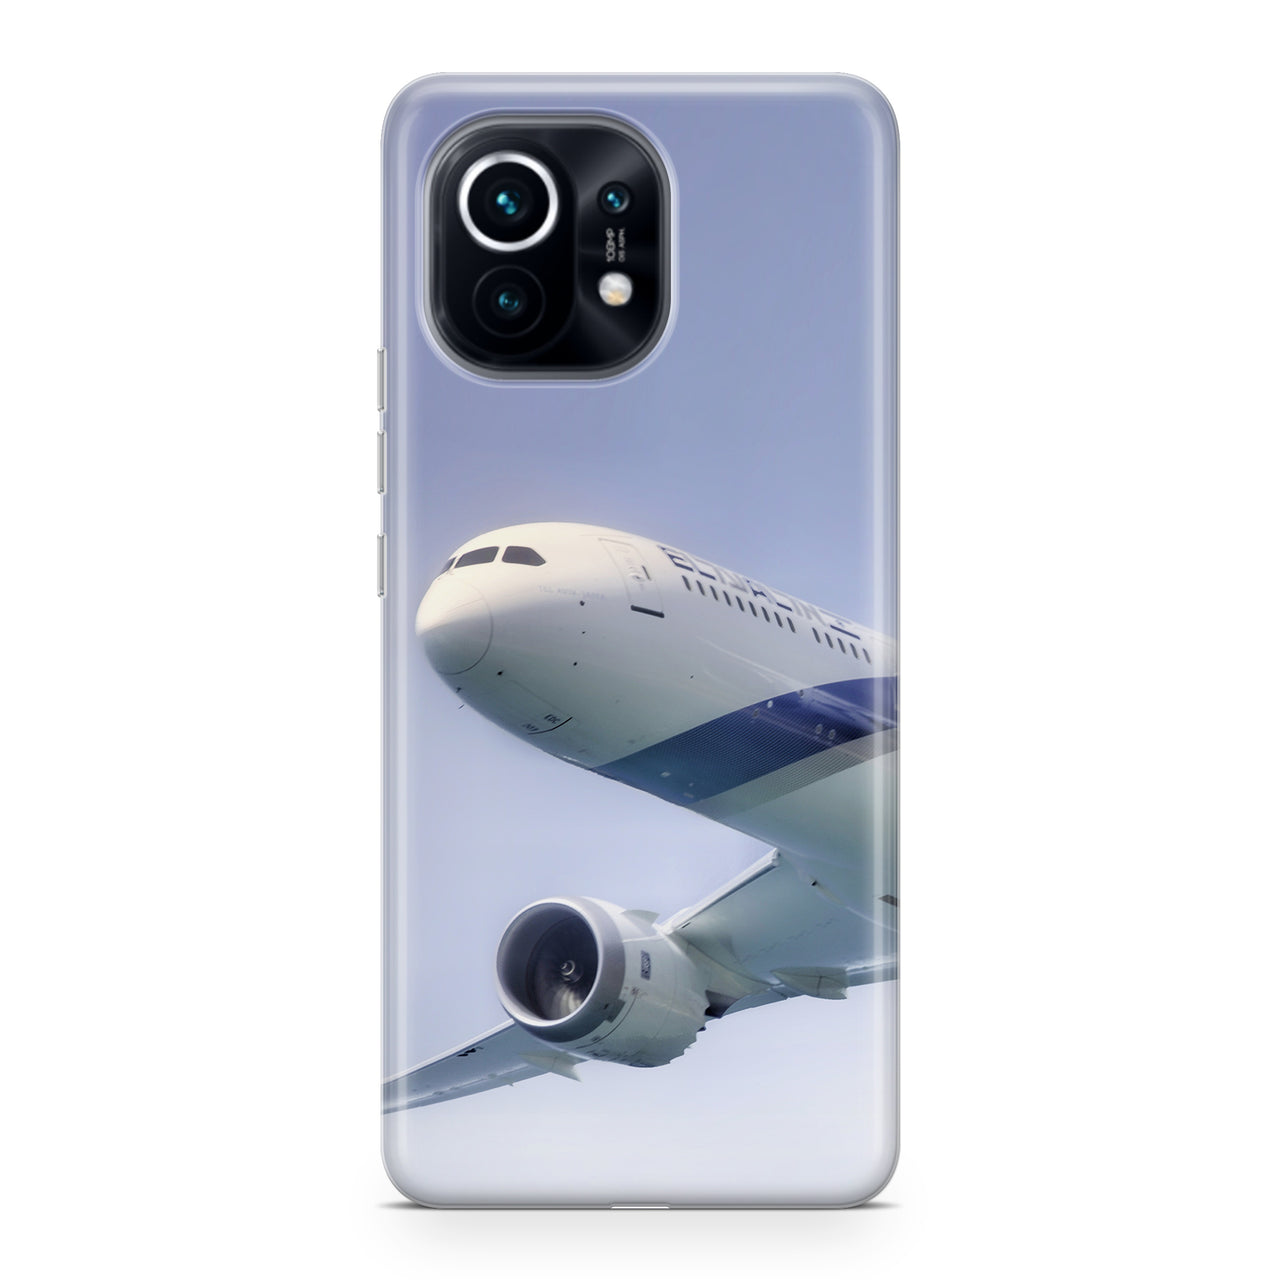 Close up to Israel Airways (El-al) Boeing 787 Designed Xiaomi Cases